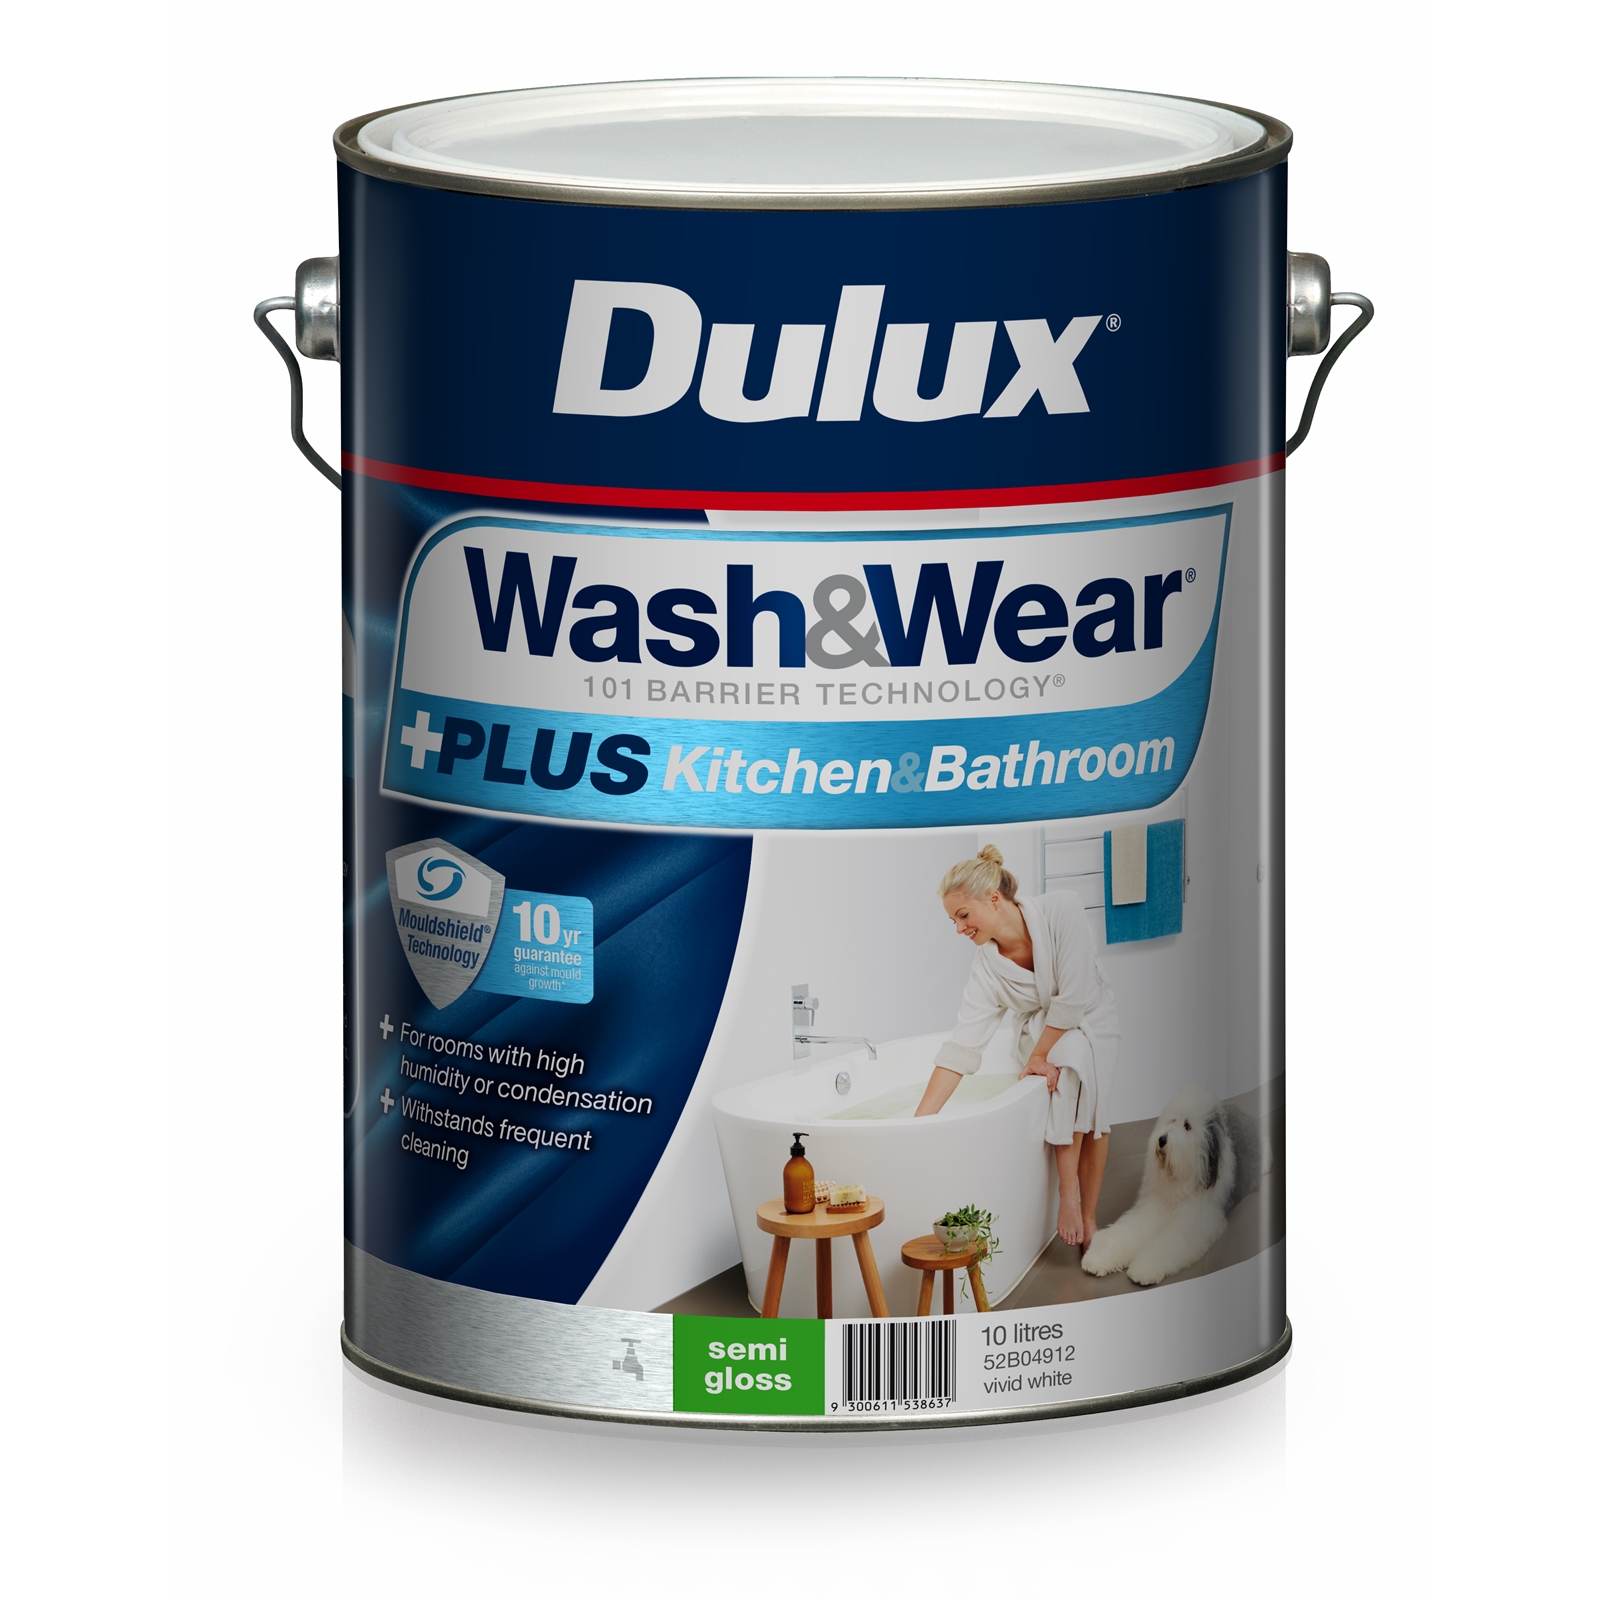 Dulux Wash&Wear 10L +Plus Kitchen & Bathroom Vivid White Semi Gloss Paint